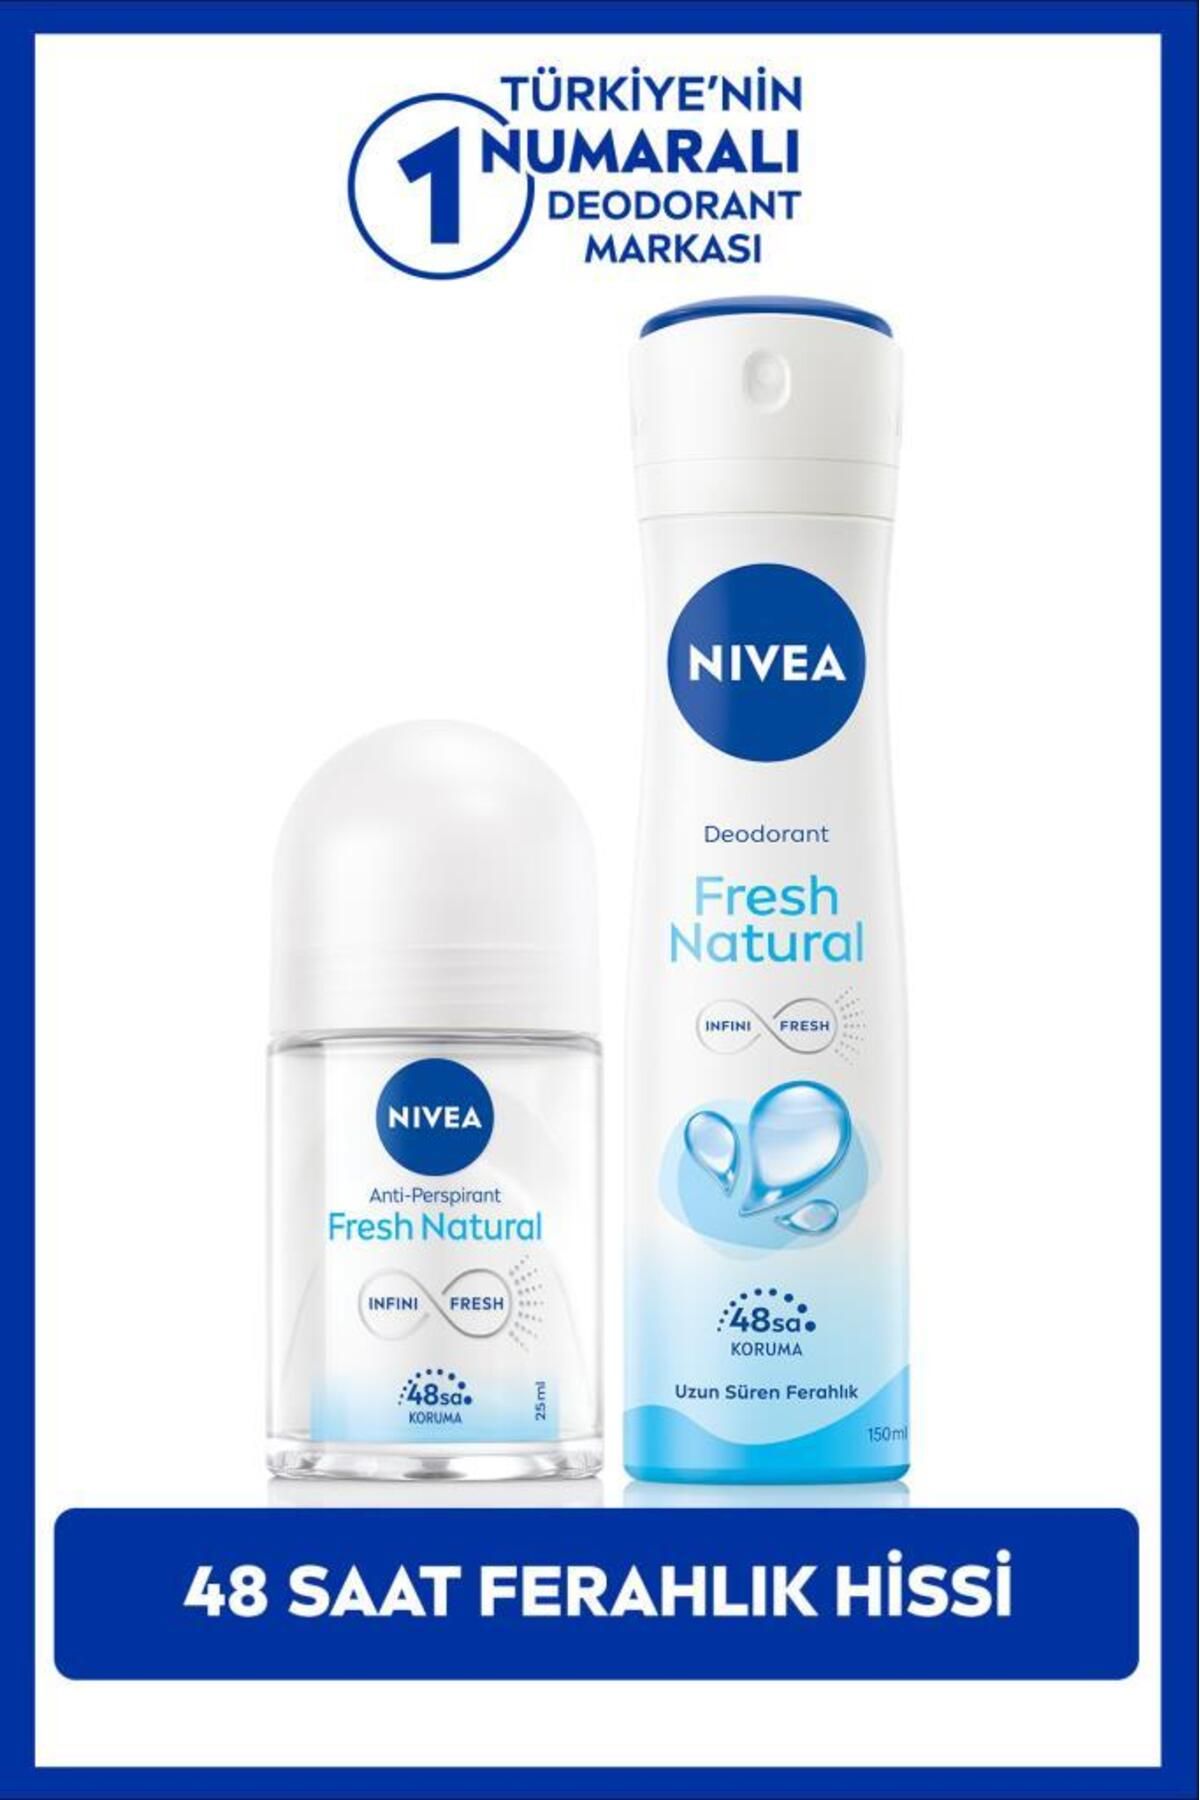 NIVEA Kadın Sprey Deodorant Fresh Natural 150ml Ve Mini Roll-on 25ml, Anti-perspirant, Avantajlı Paket